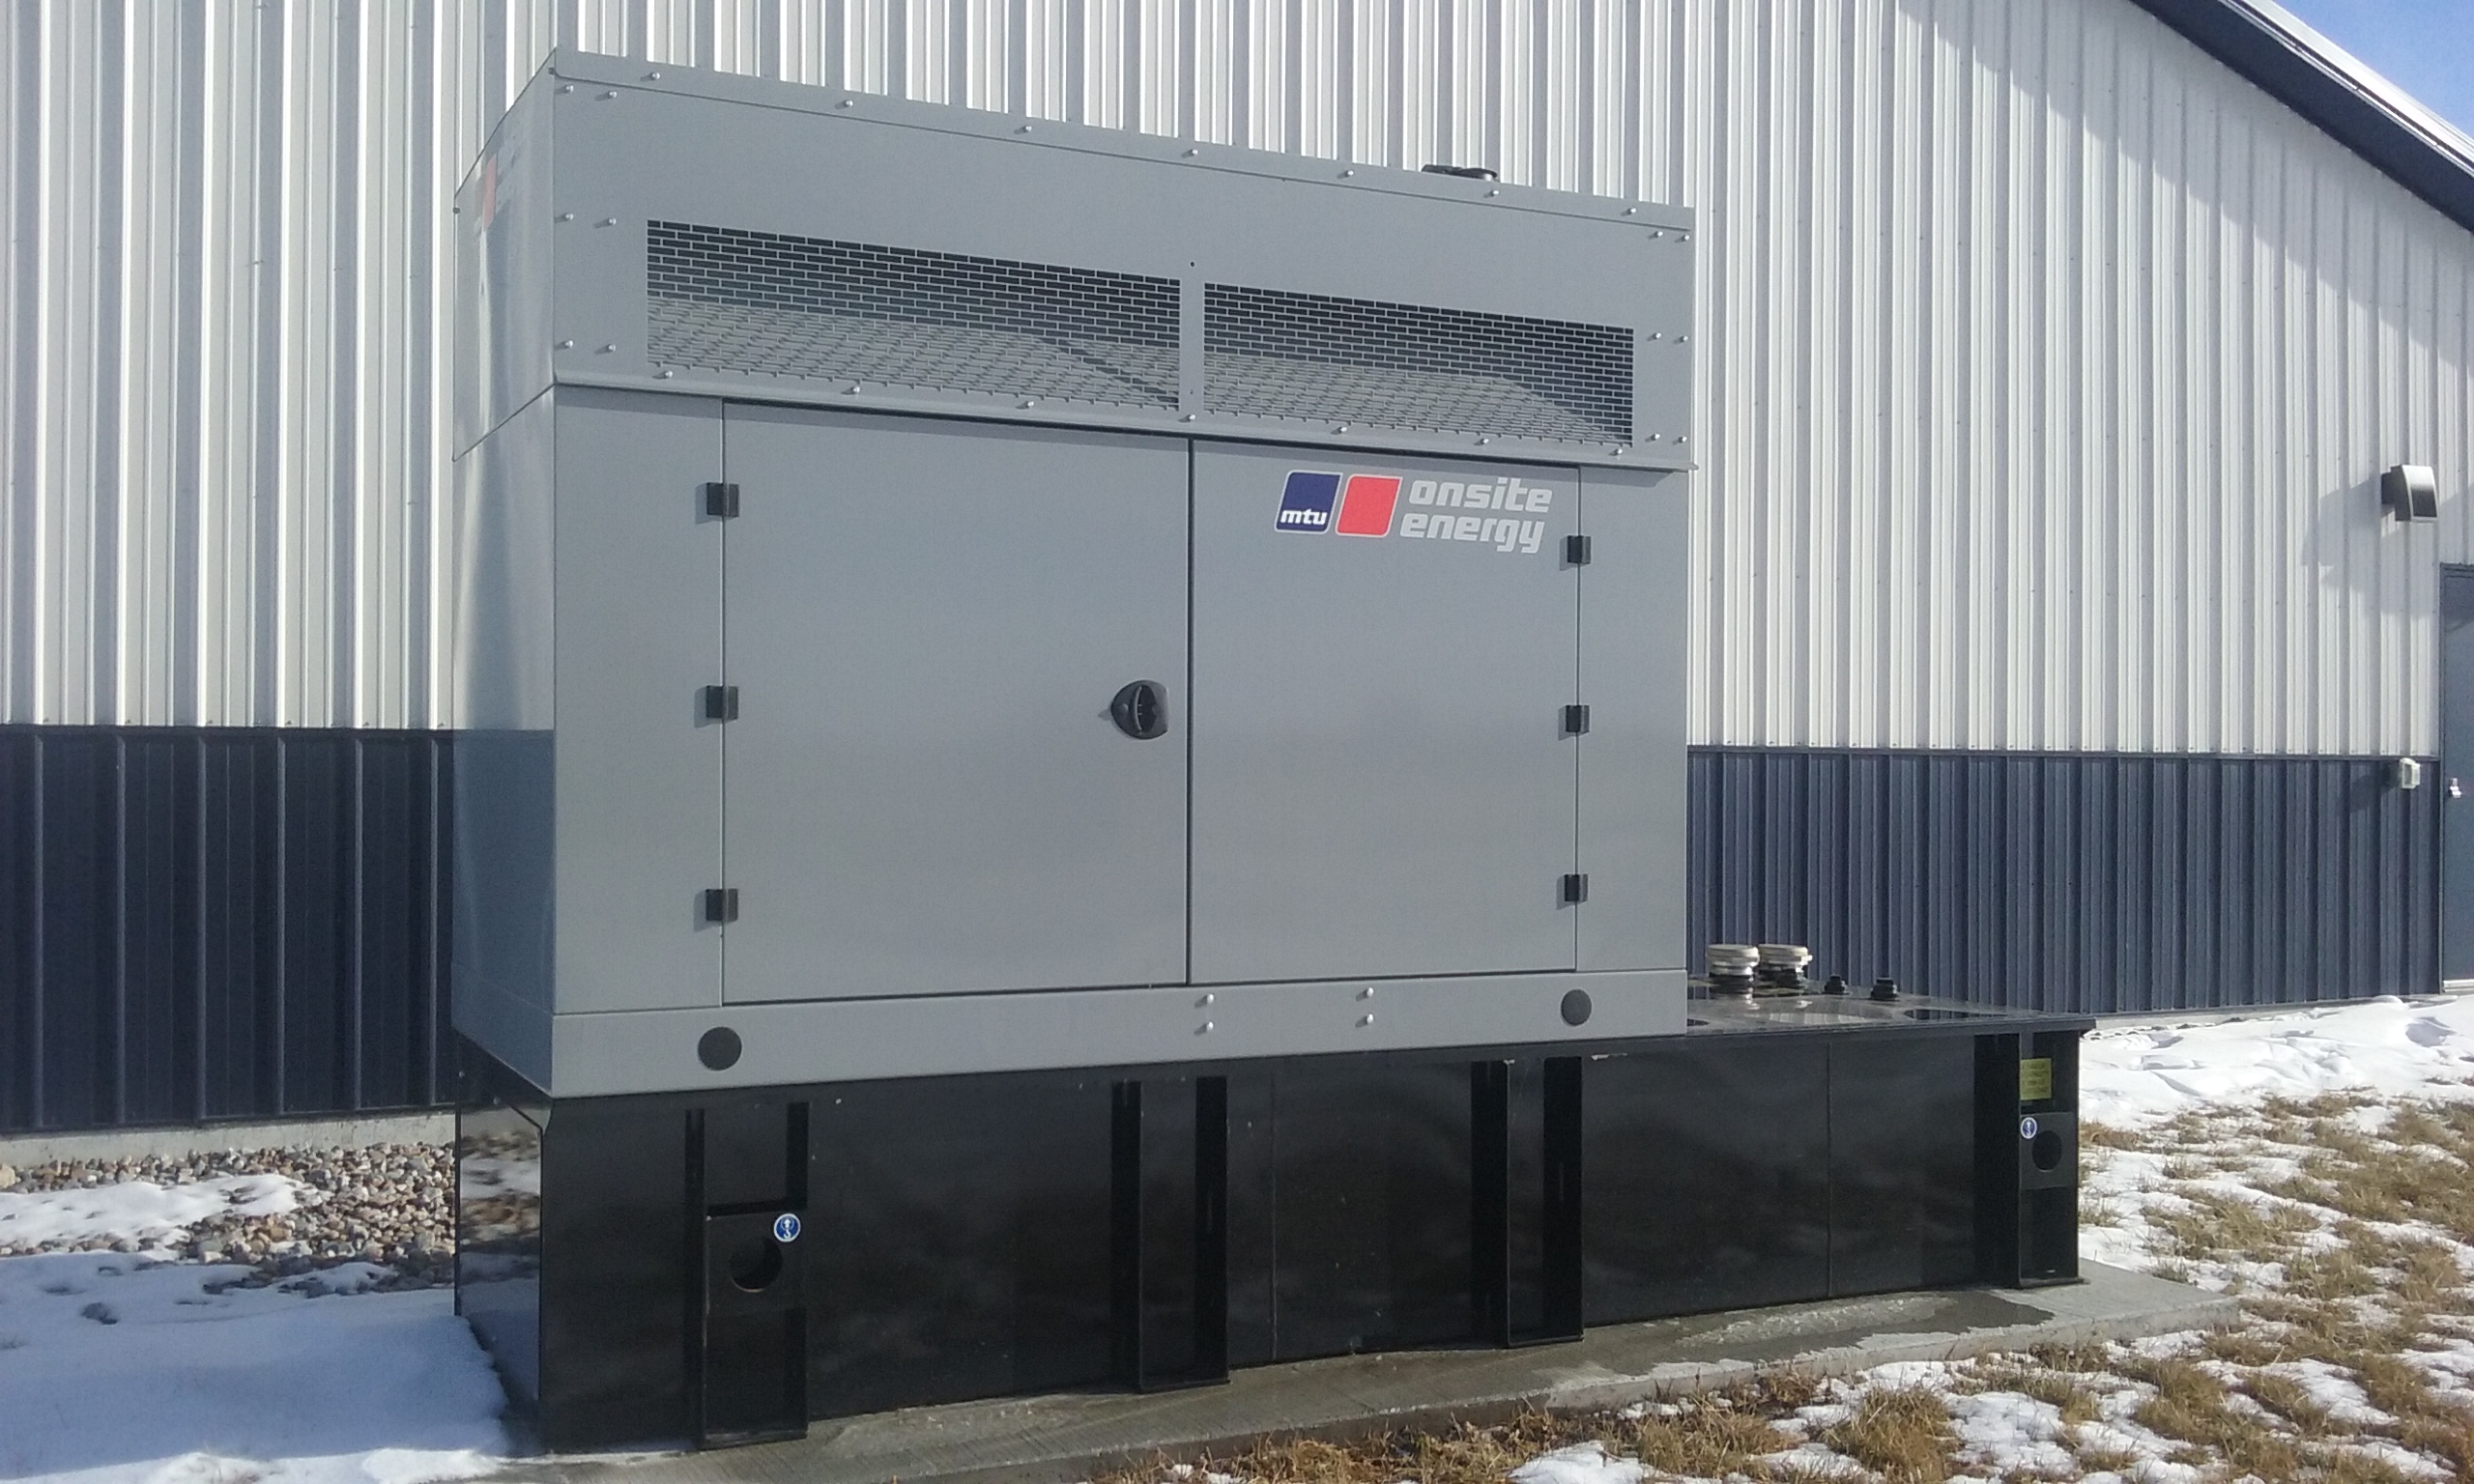 A backup generator outside a swine facility.